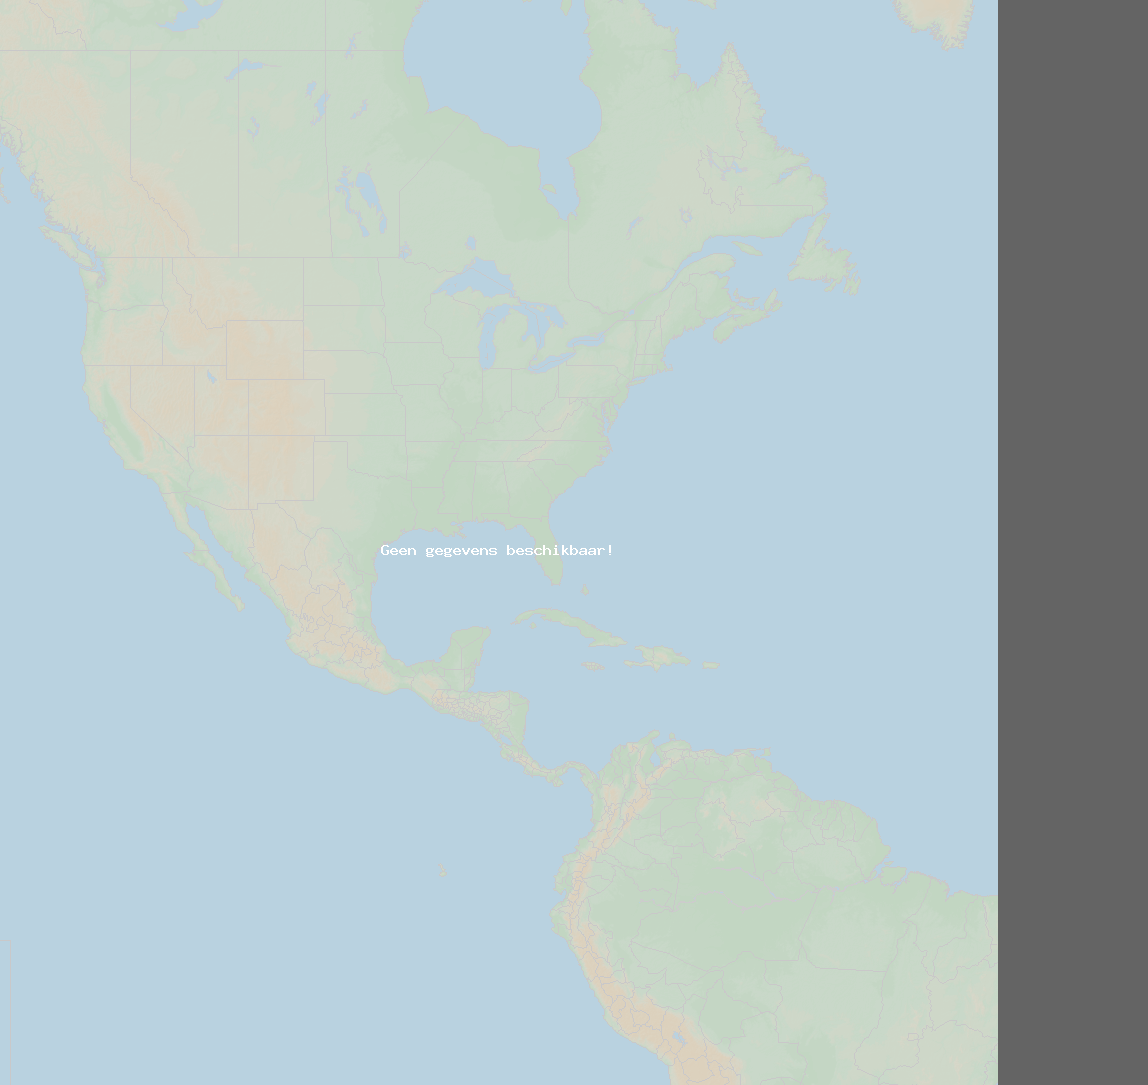 Inslagverhouding (Station Spearfish) North America 2024 januari